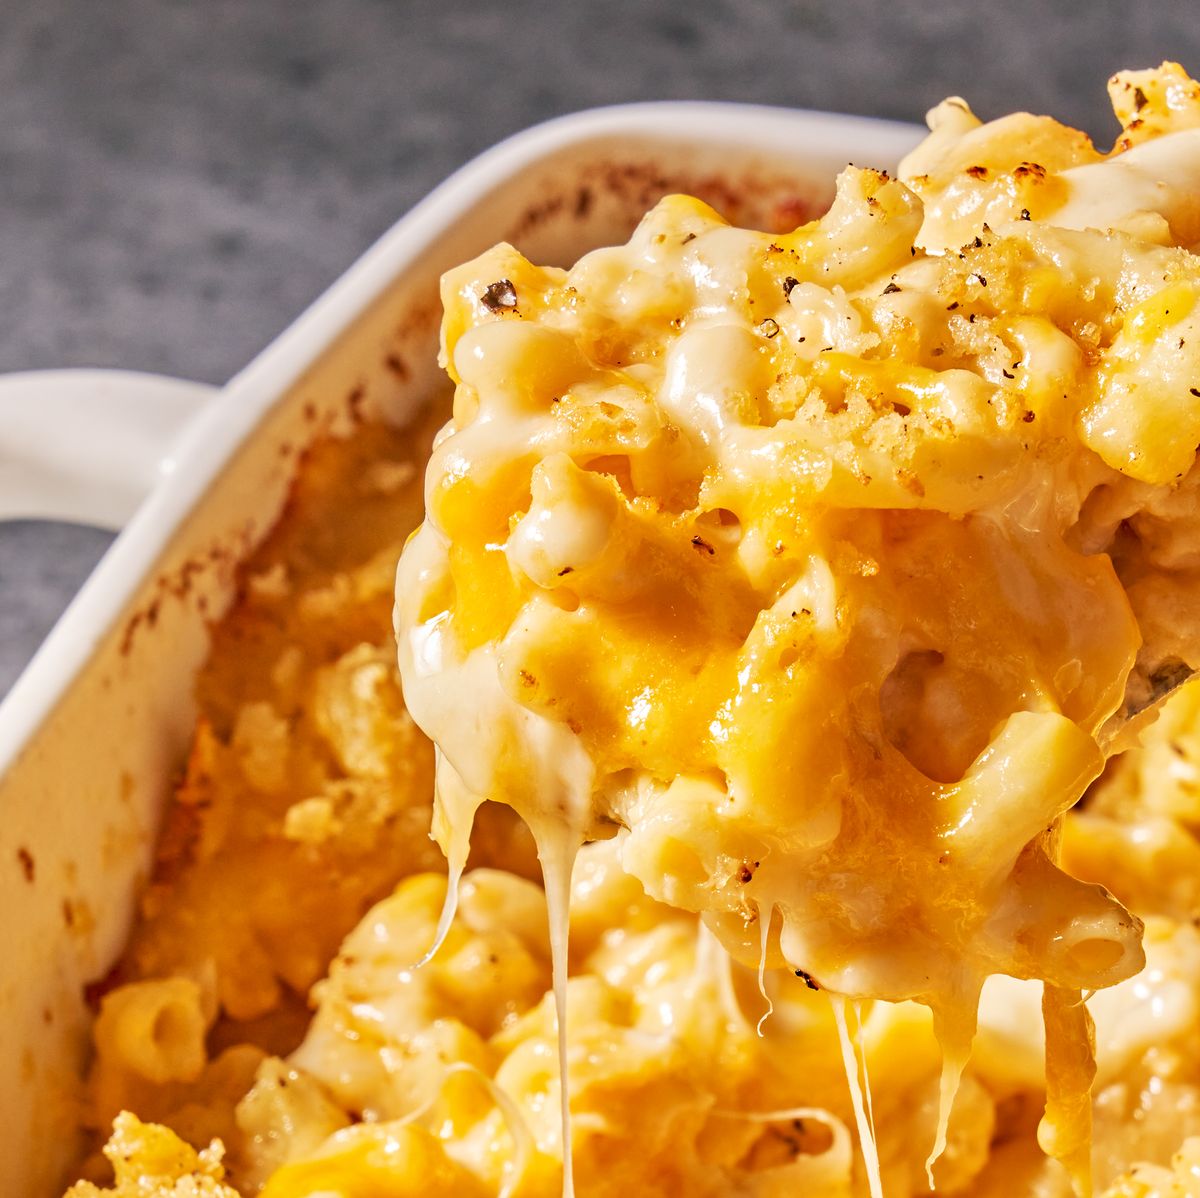 Best Homemade Mac & Cheese Recipe - How To Make Macaroni And Cheese